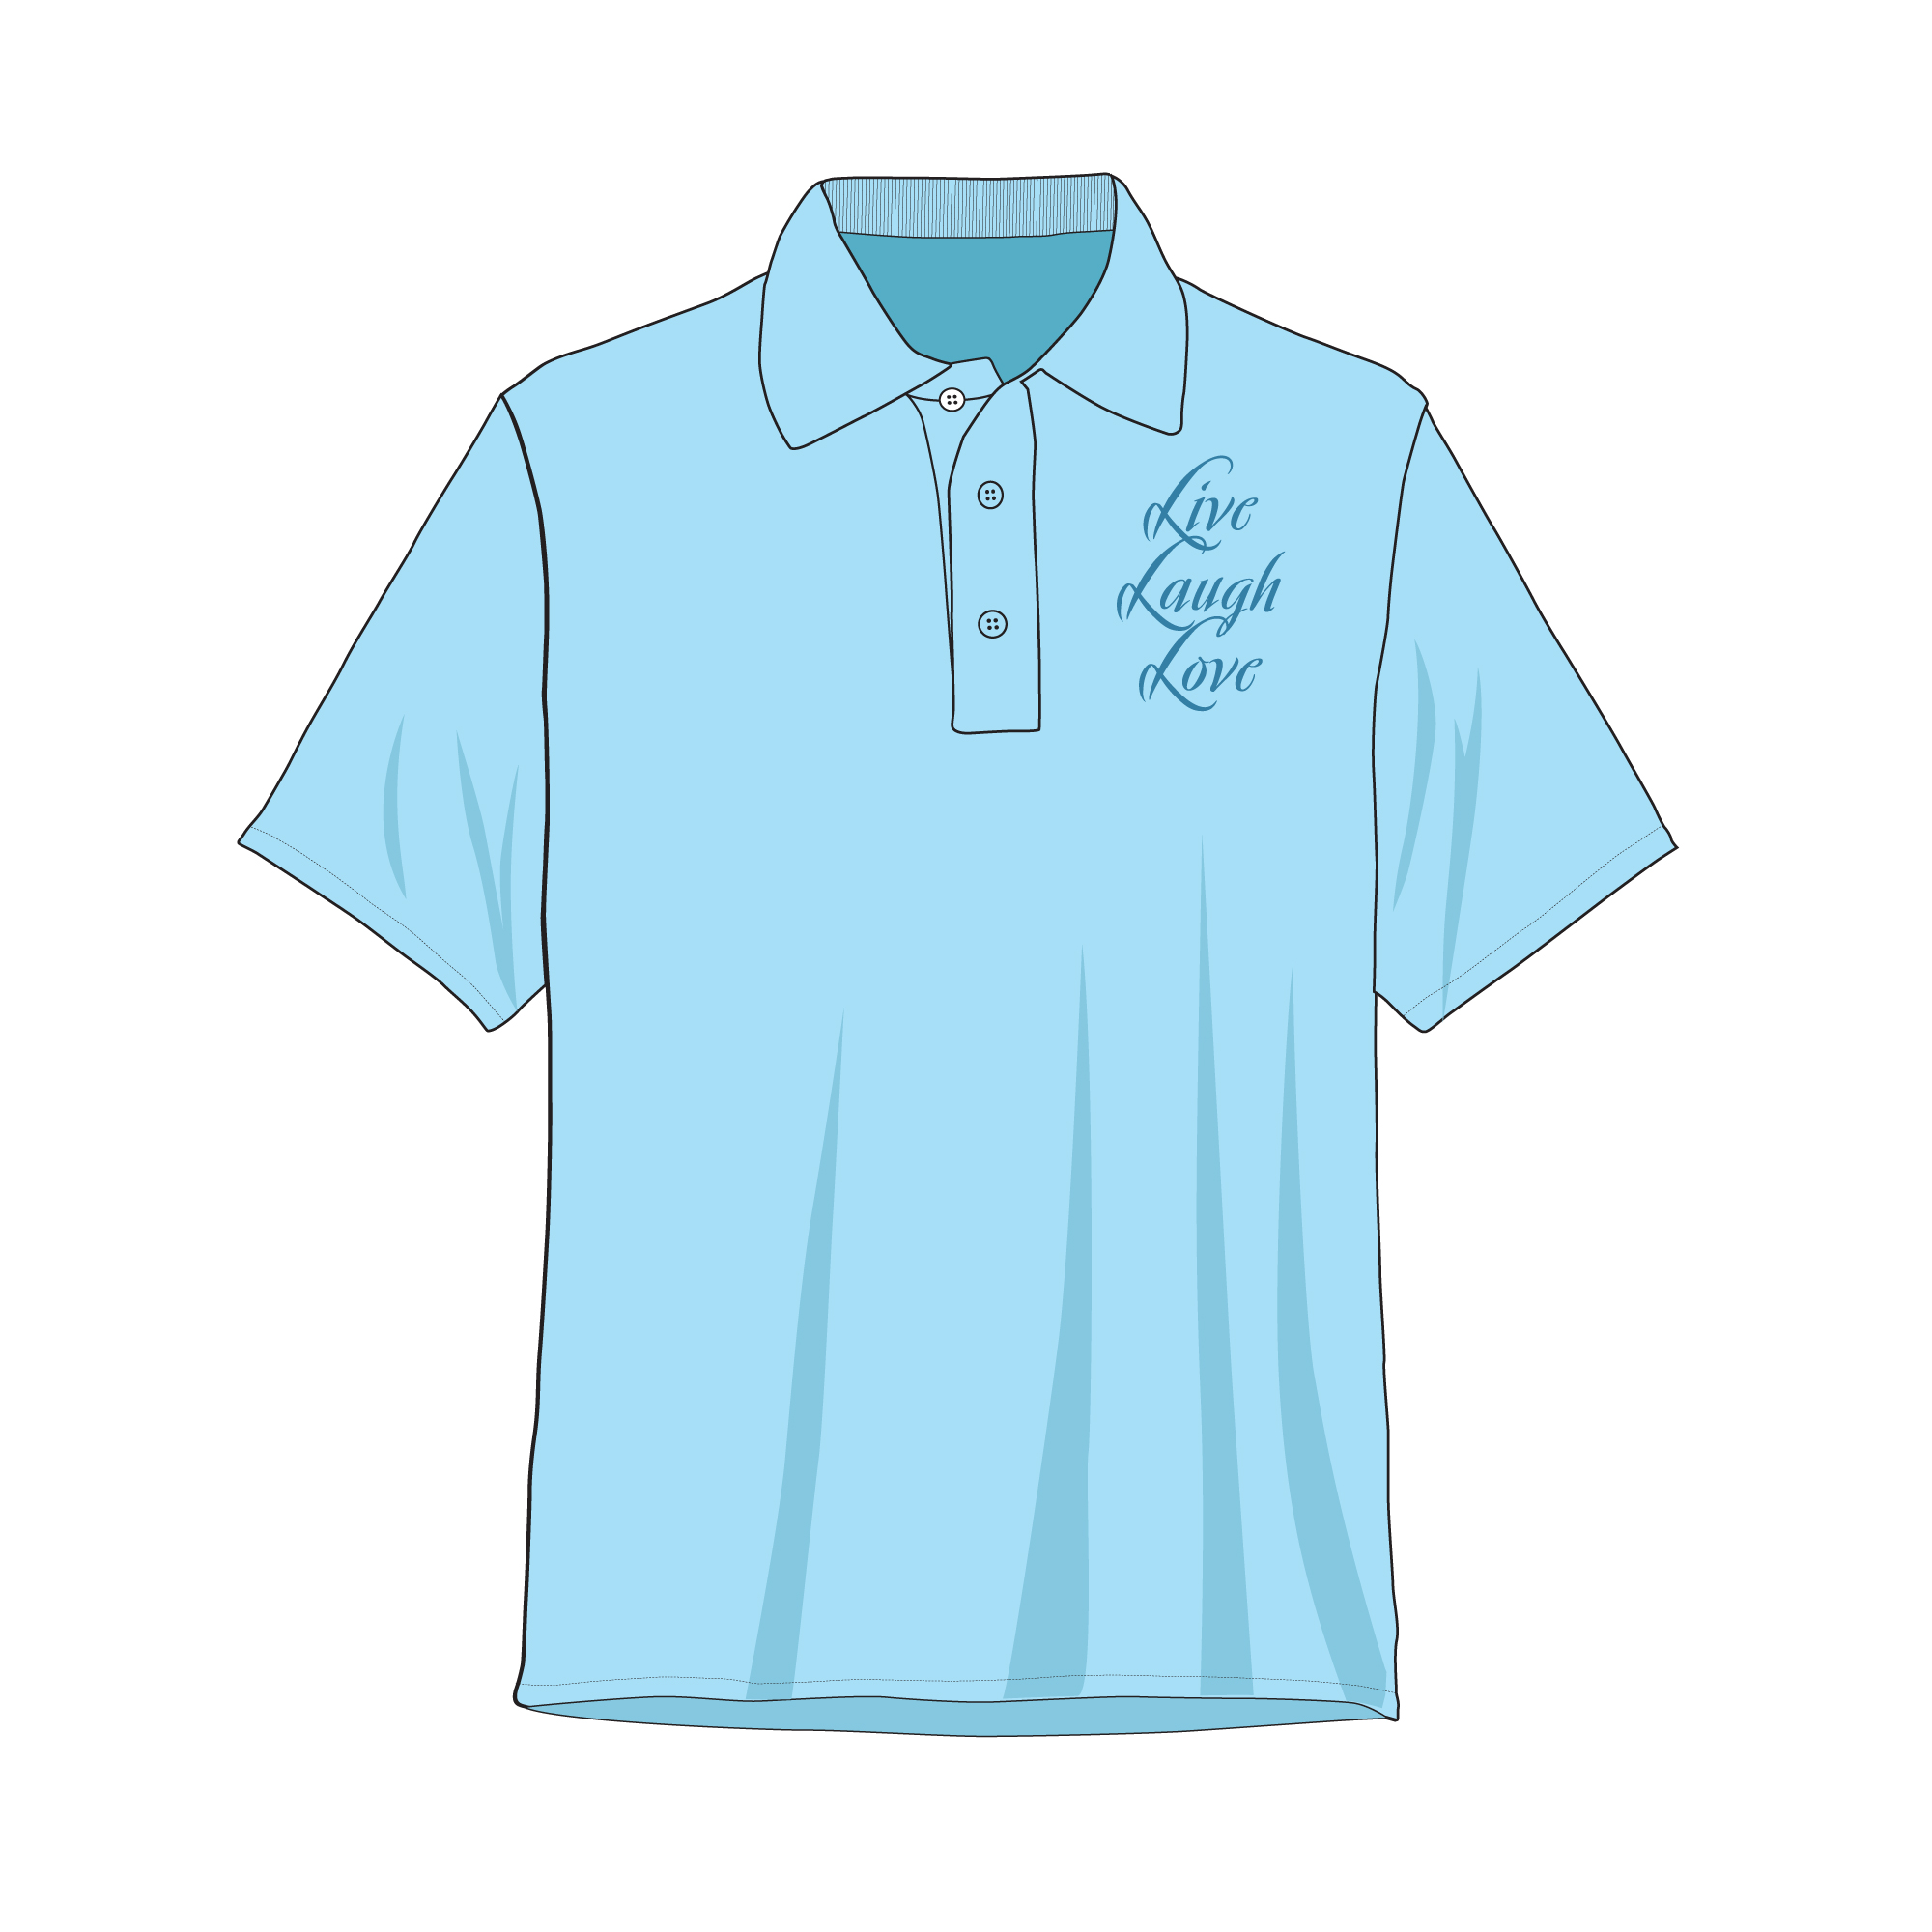 Download Golf/Polo Shirt - Mockup and Template - 8 Angles, Layered ...